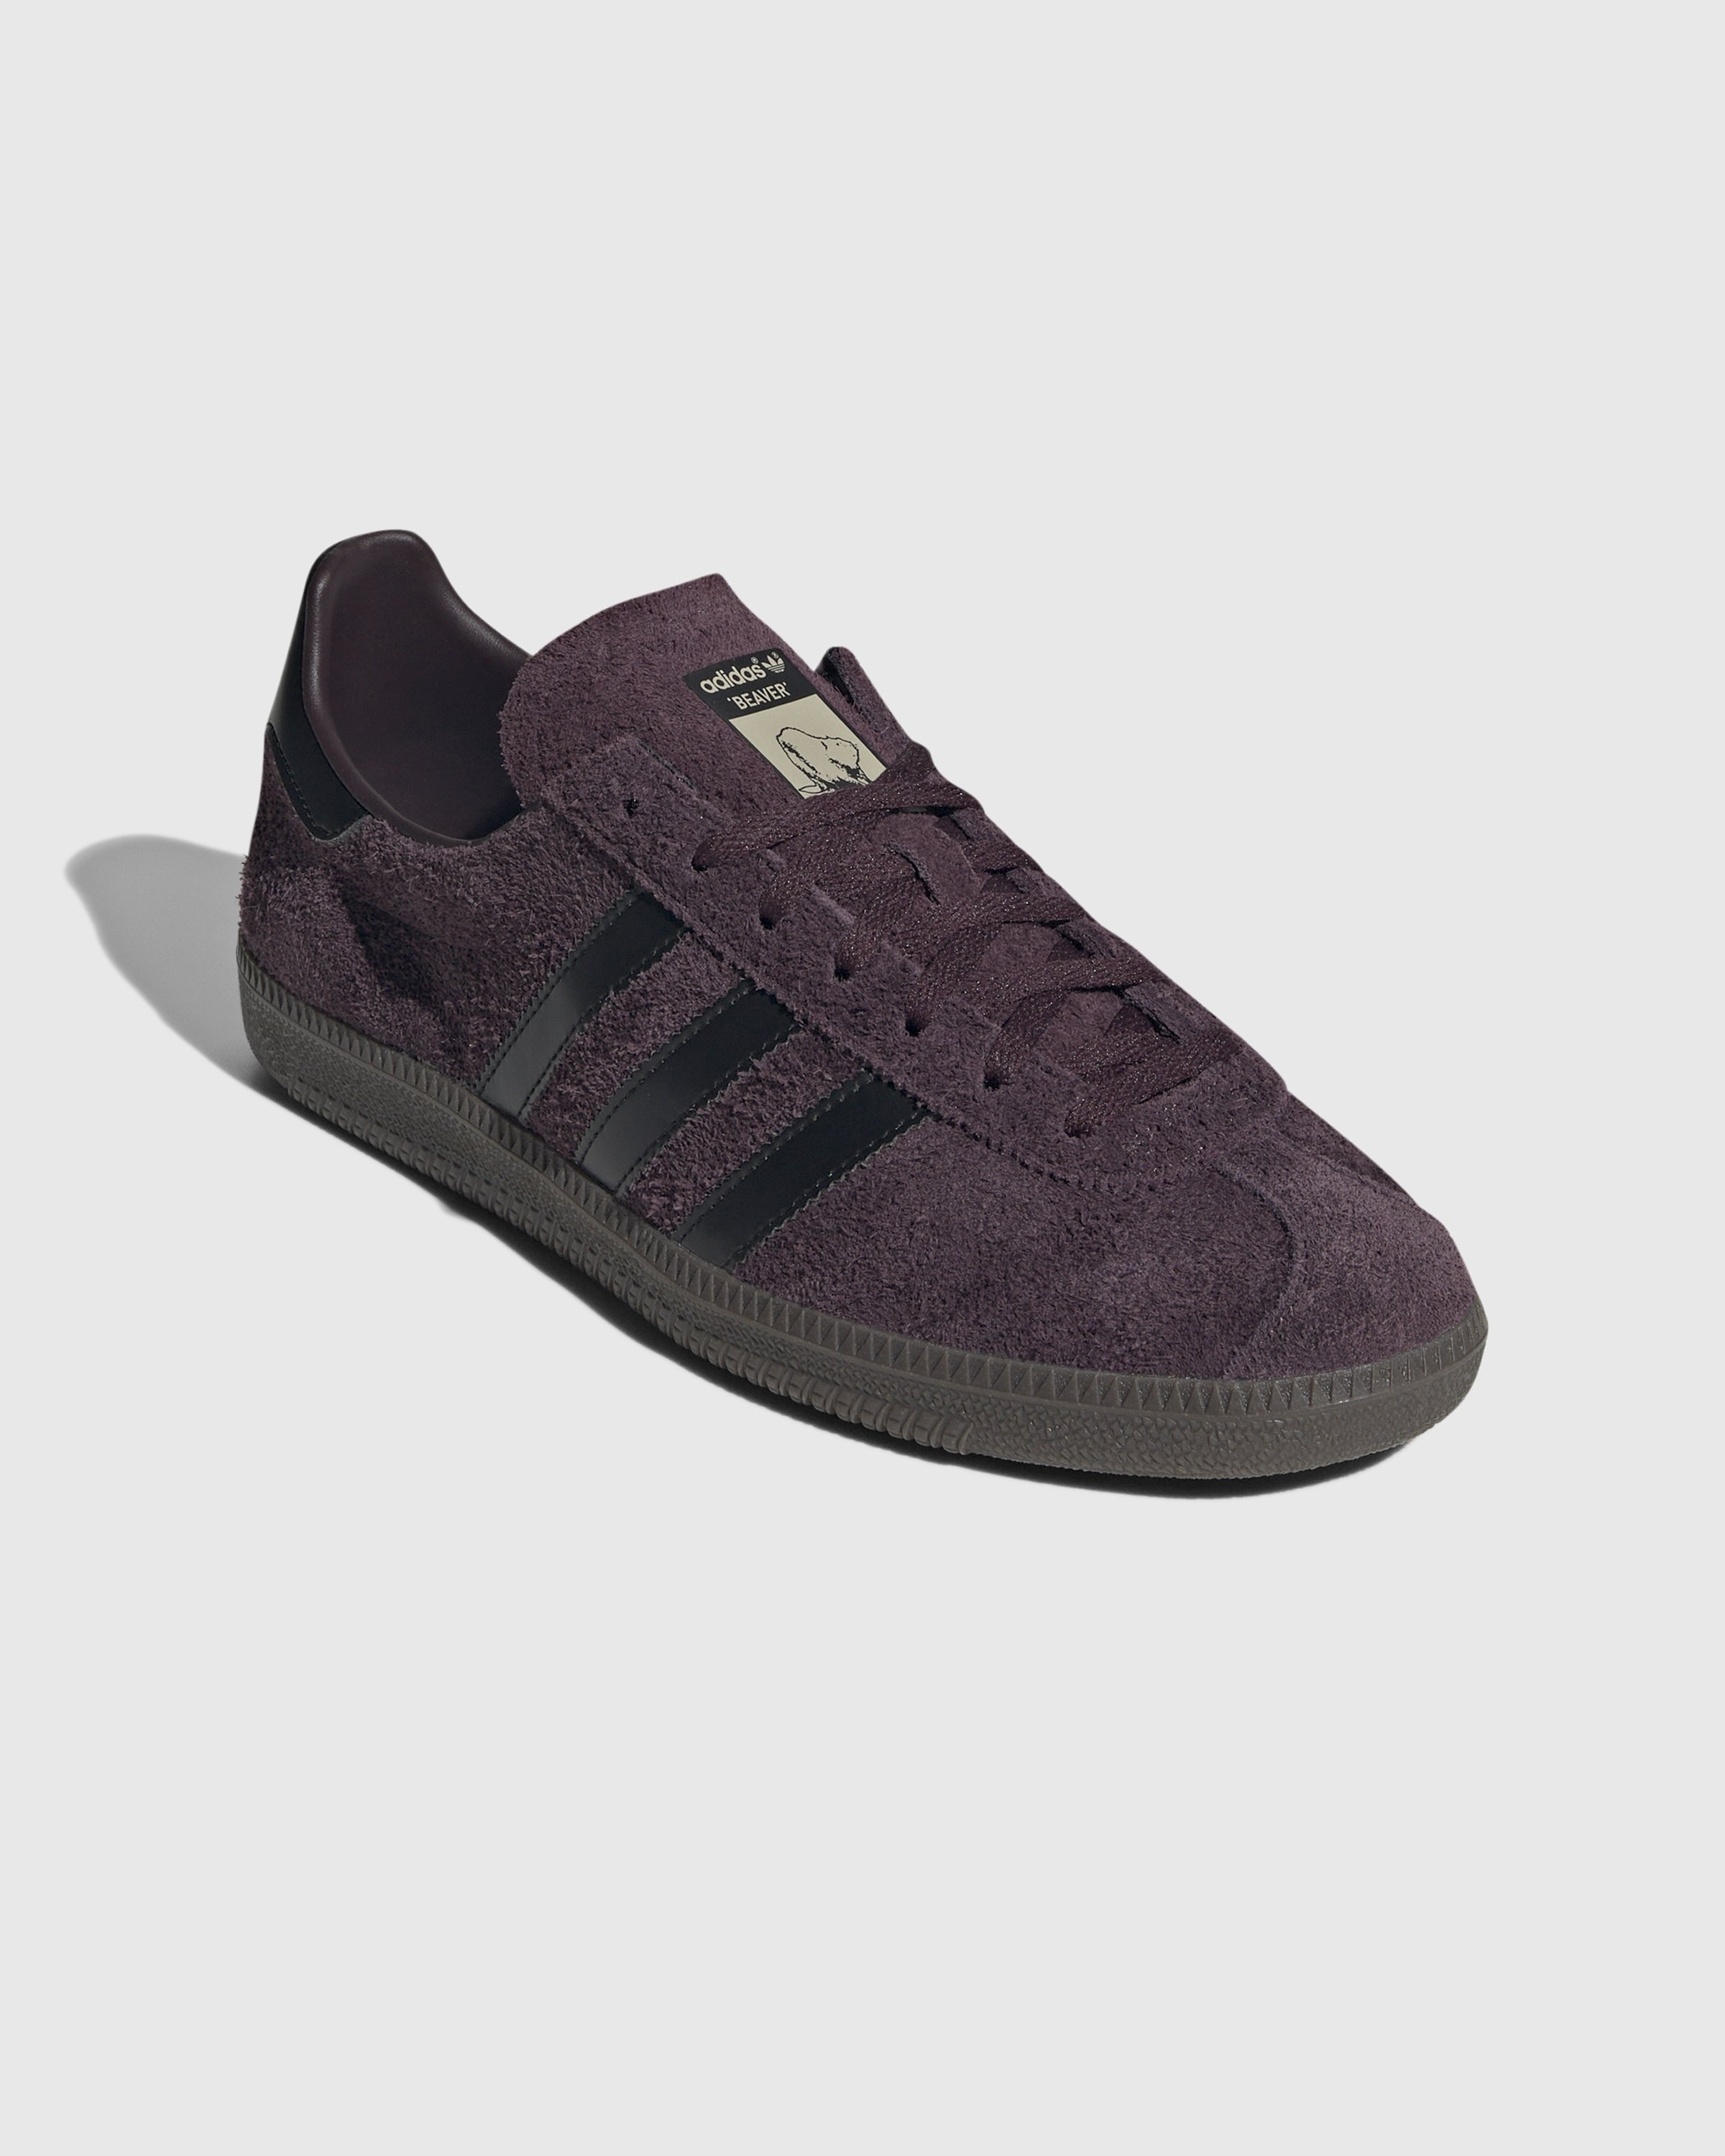 Adidas – State Brown - Sneakers - Brown - Image 3